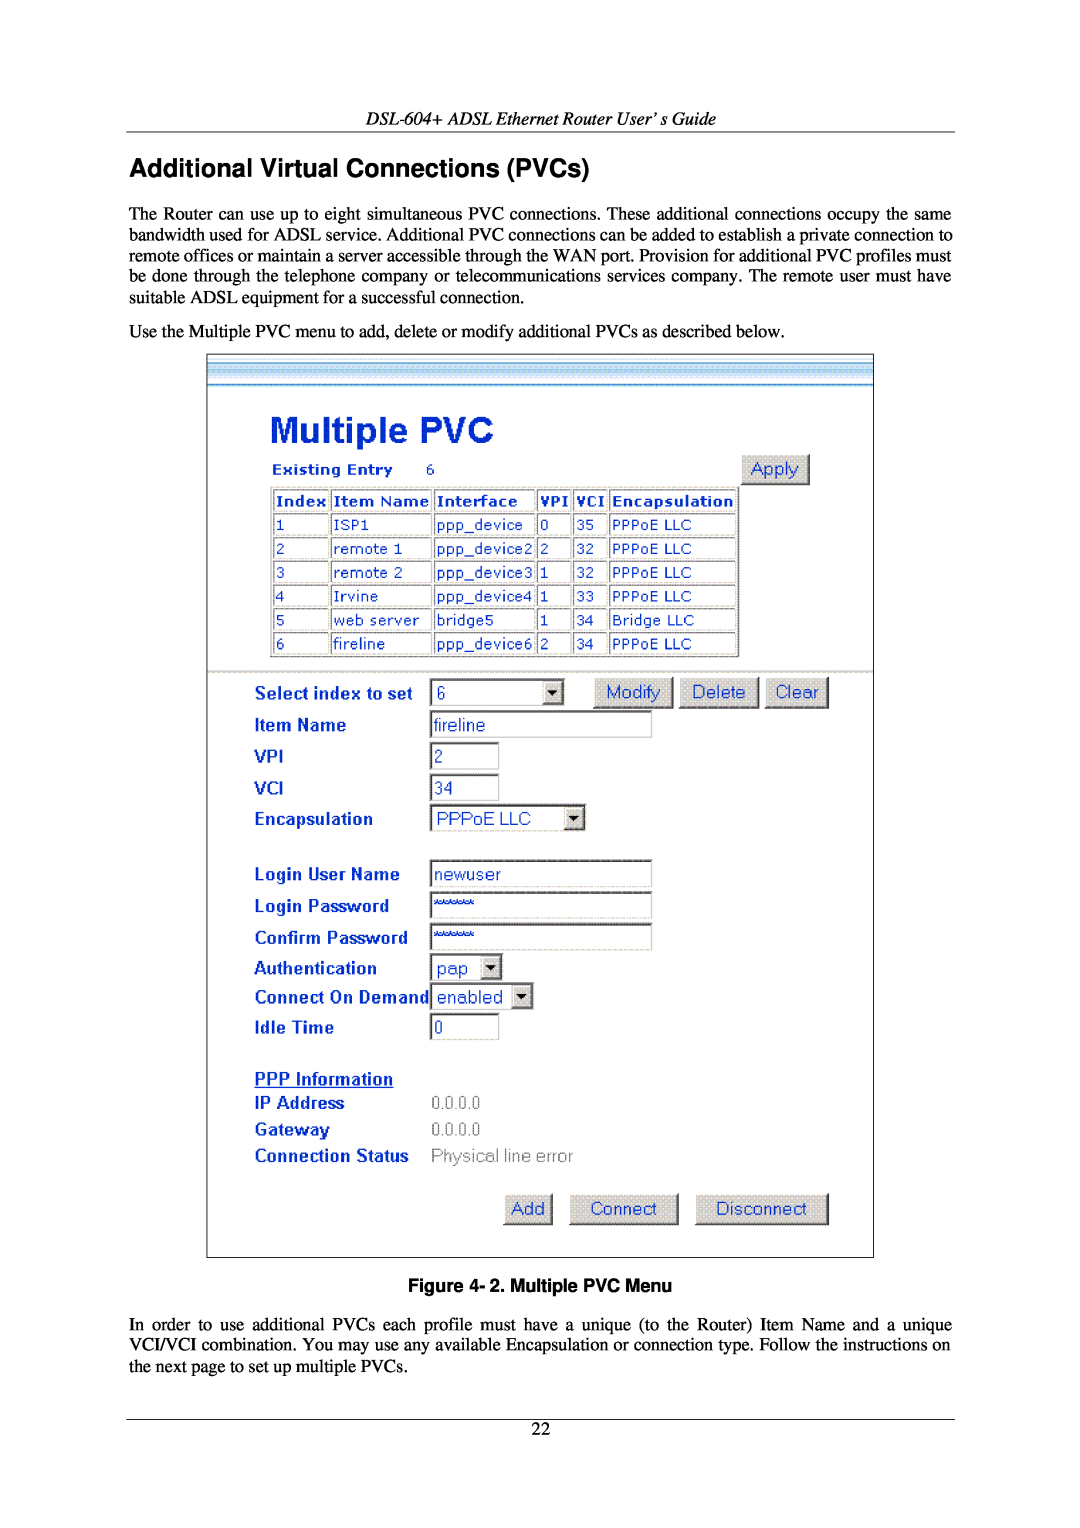 D-Link manual Additional Virtual Connections PVCs, DSL-604+ ADSL Ethernet Router User’s Guide, 2. Multiple PVC Menu 